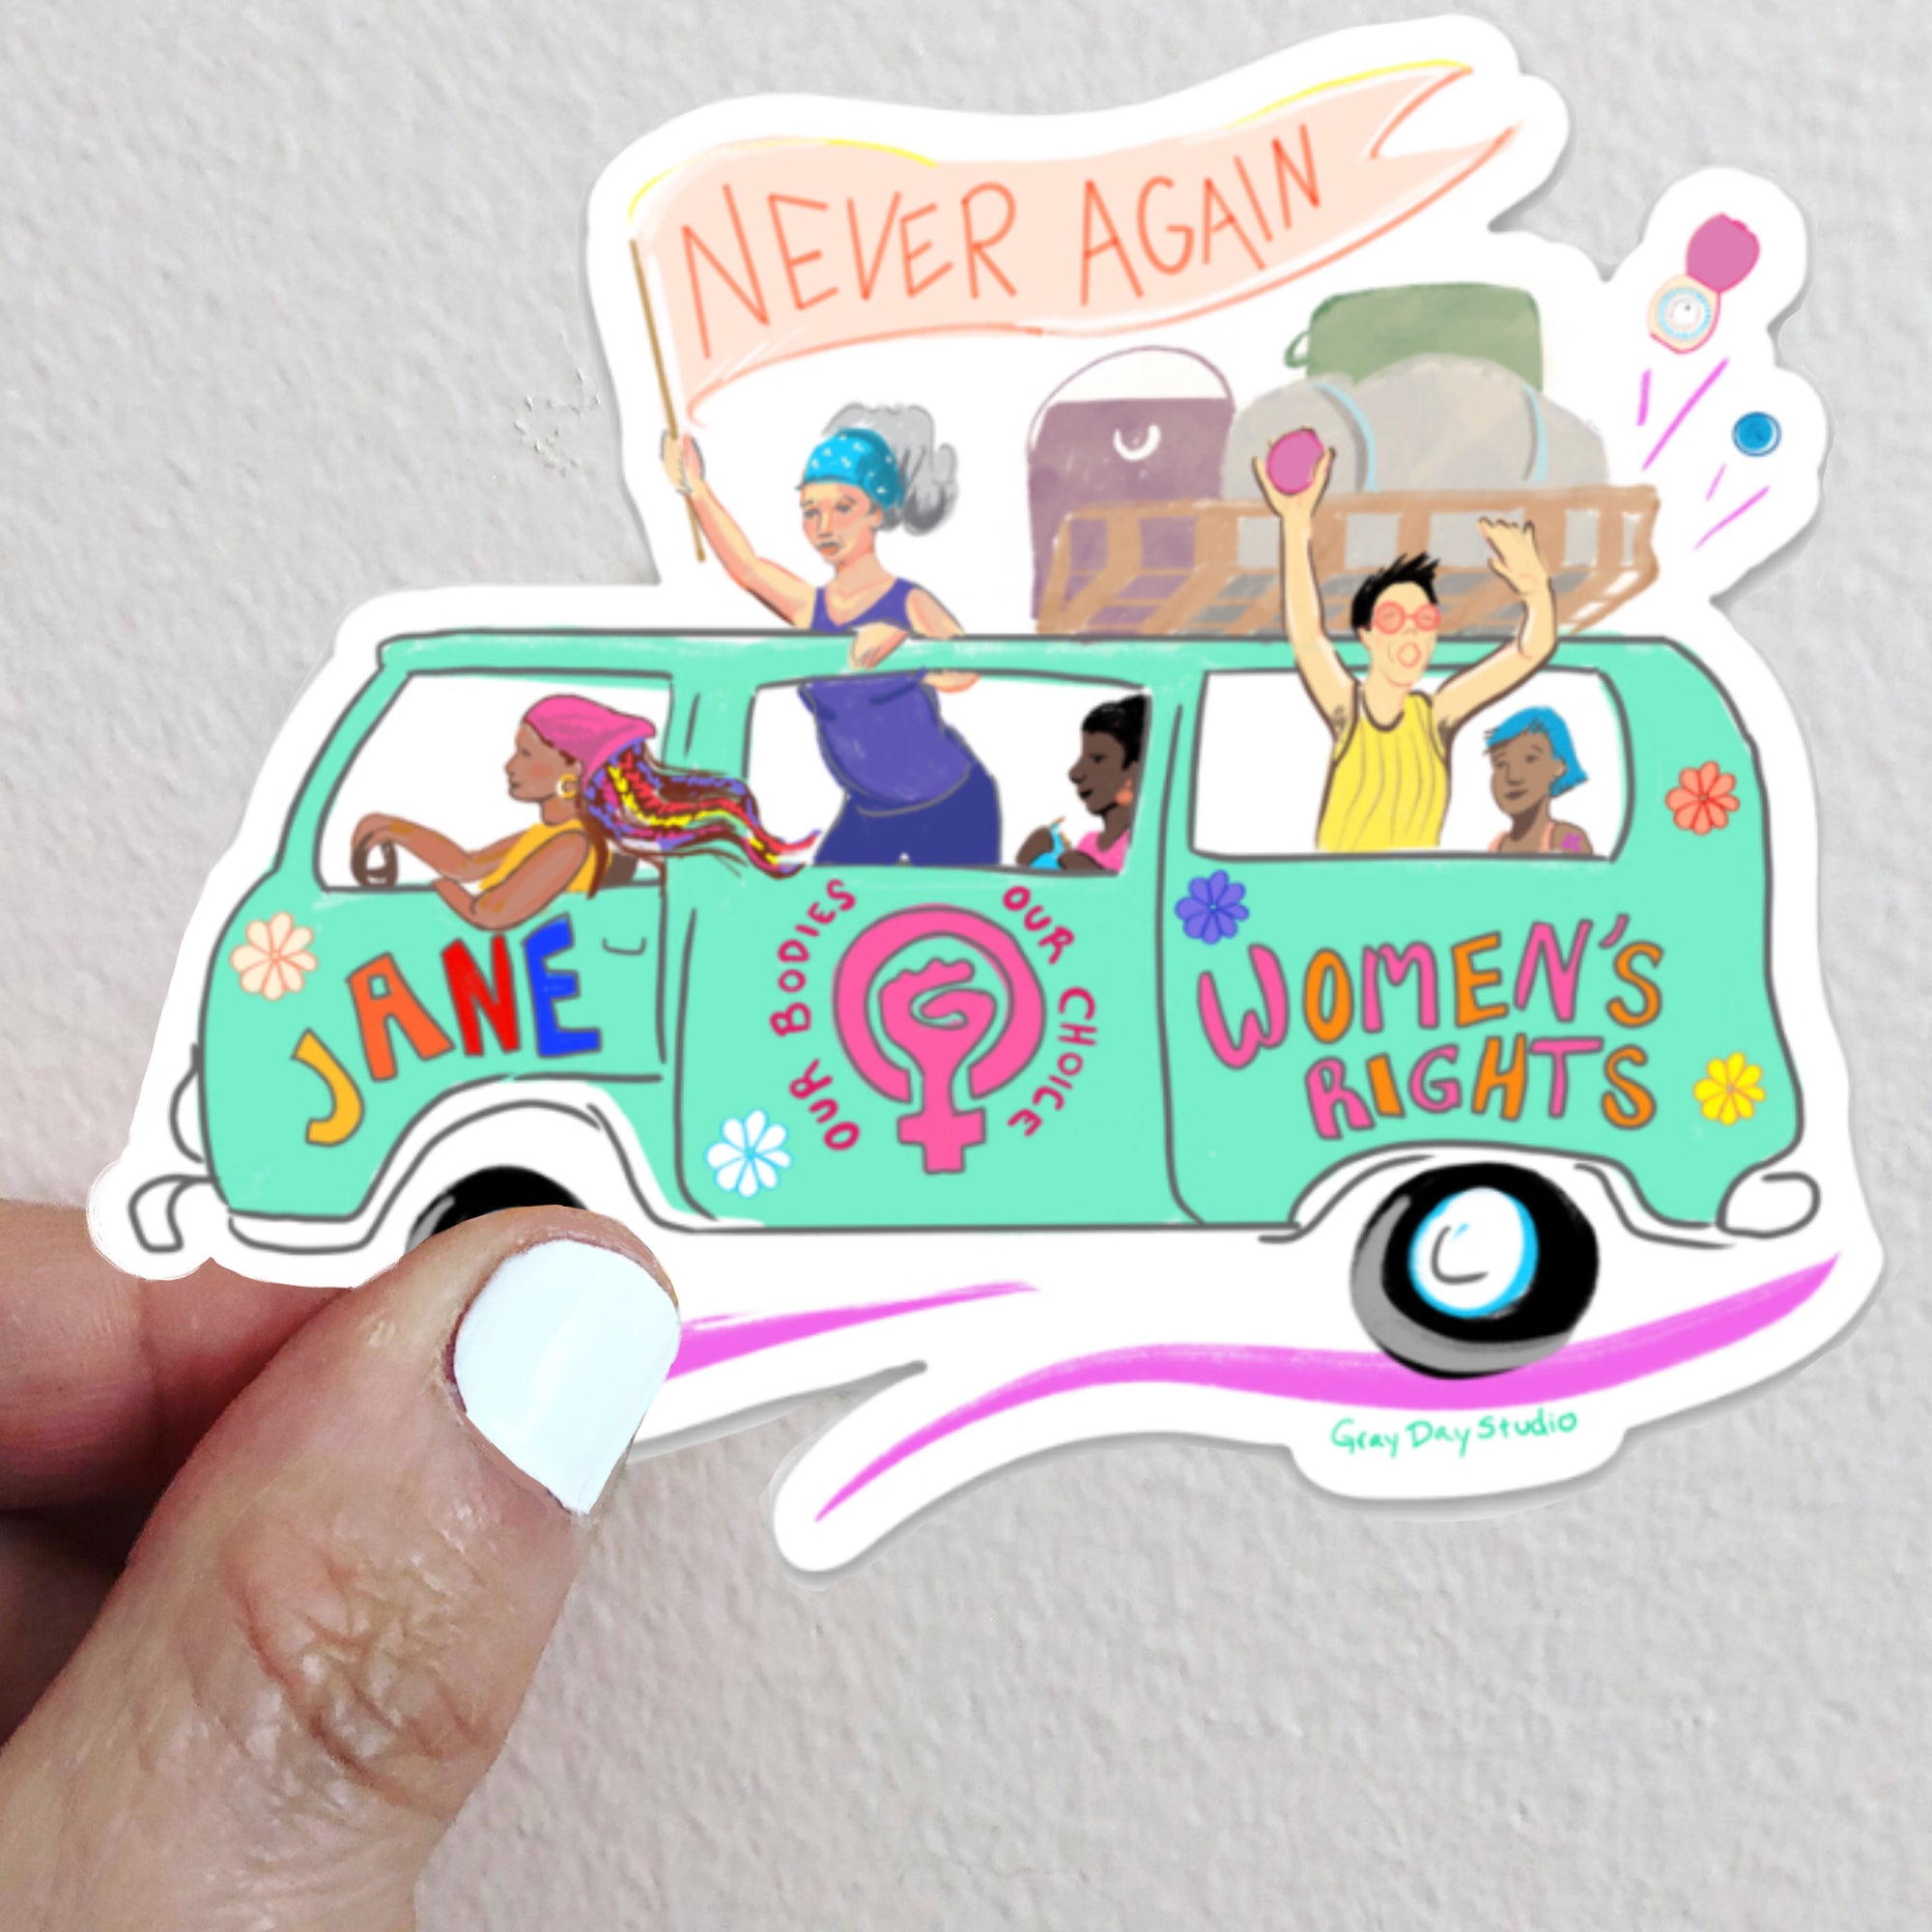 Women's rights, jane bus sticker, pro choice sticker, vw bus caravan